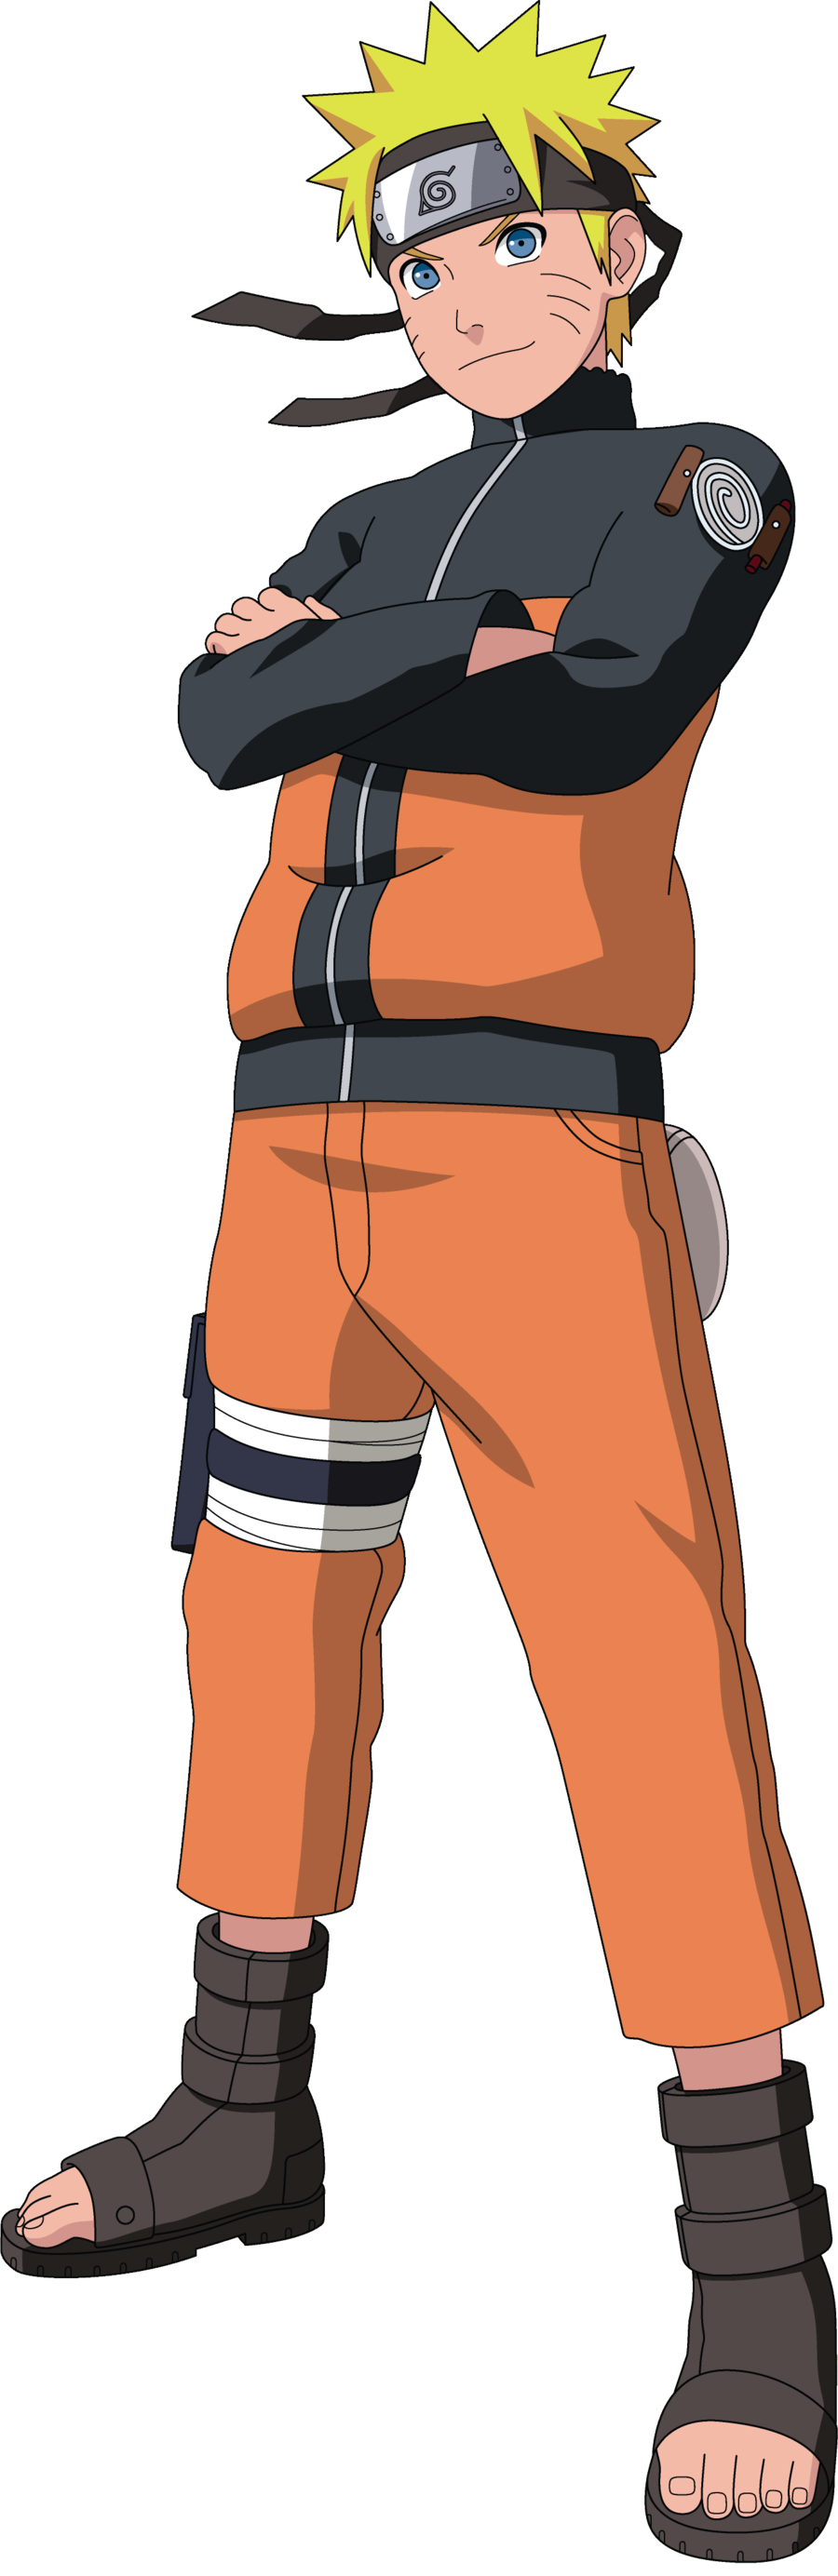 The costumes of Naruto Uzumaki  Naruto and Naruto cosplay